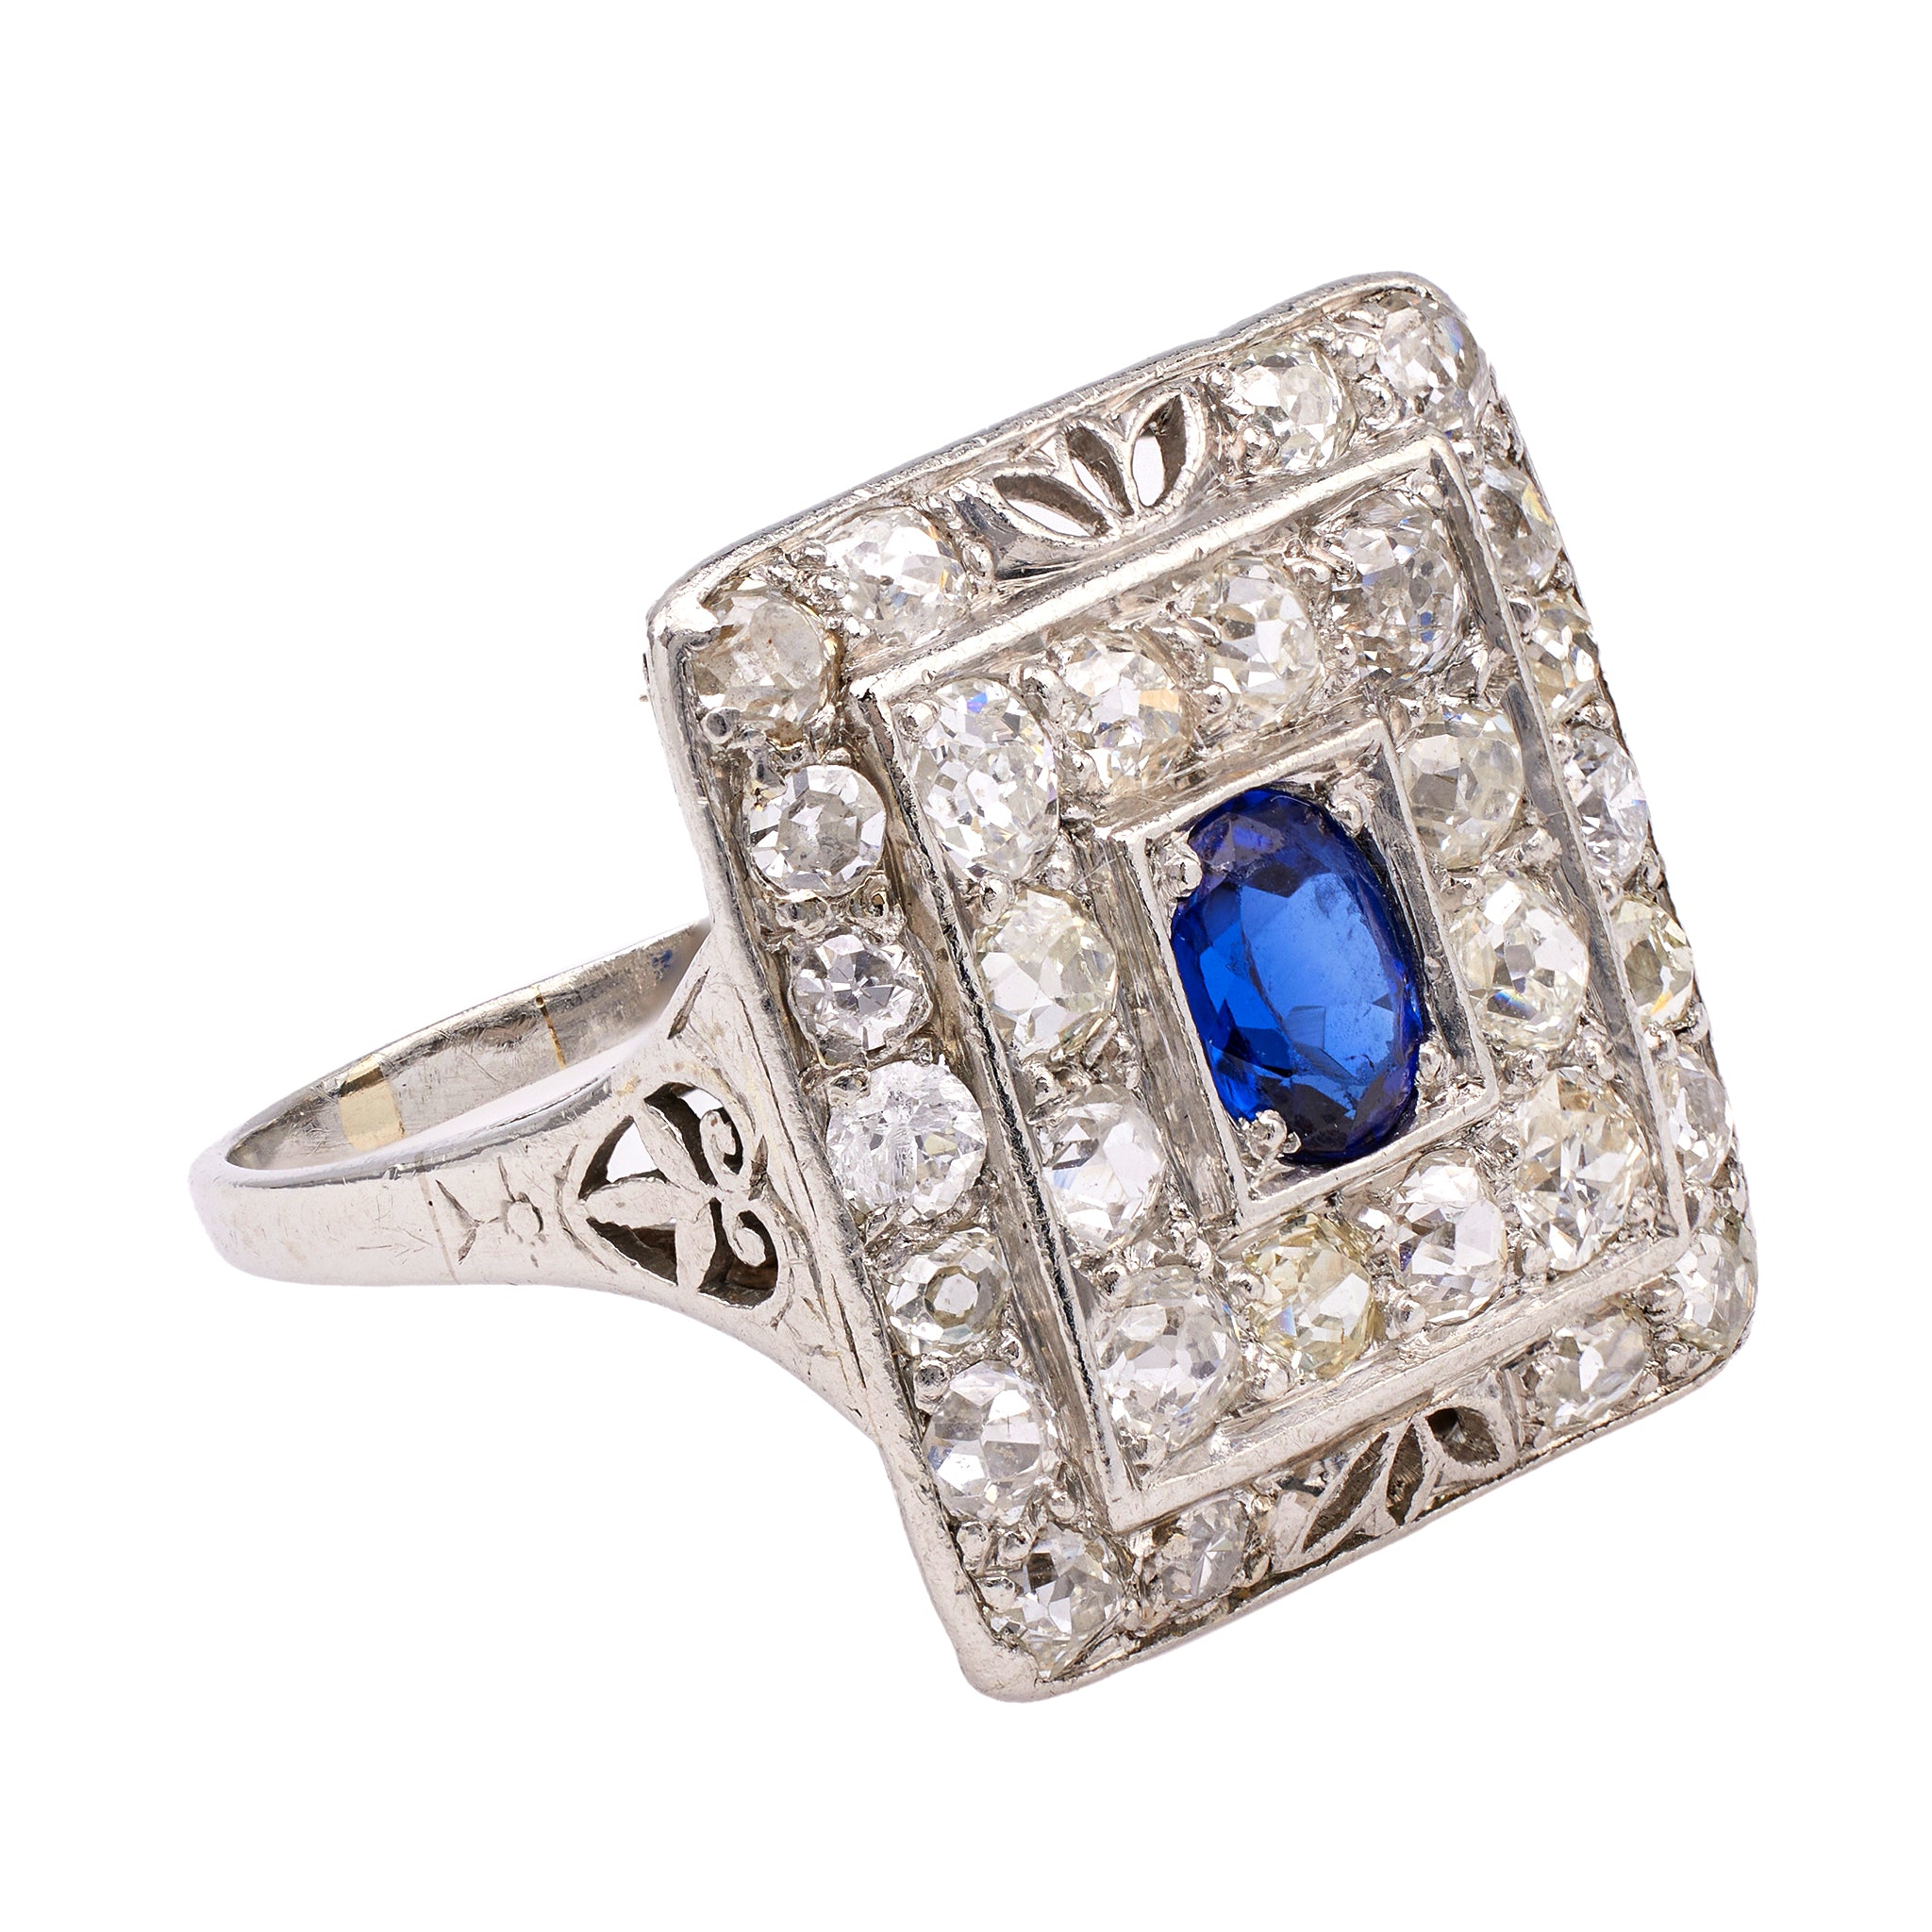 Art Deco Sapphire and Diamond Platinum Square Ring